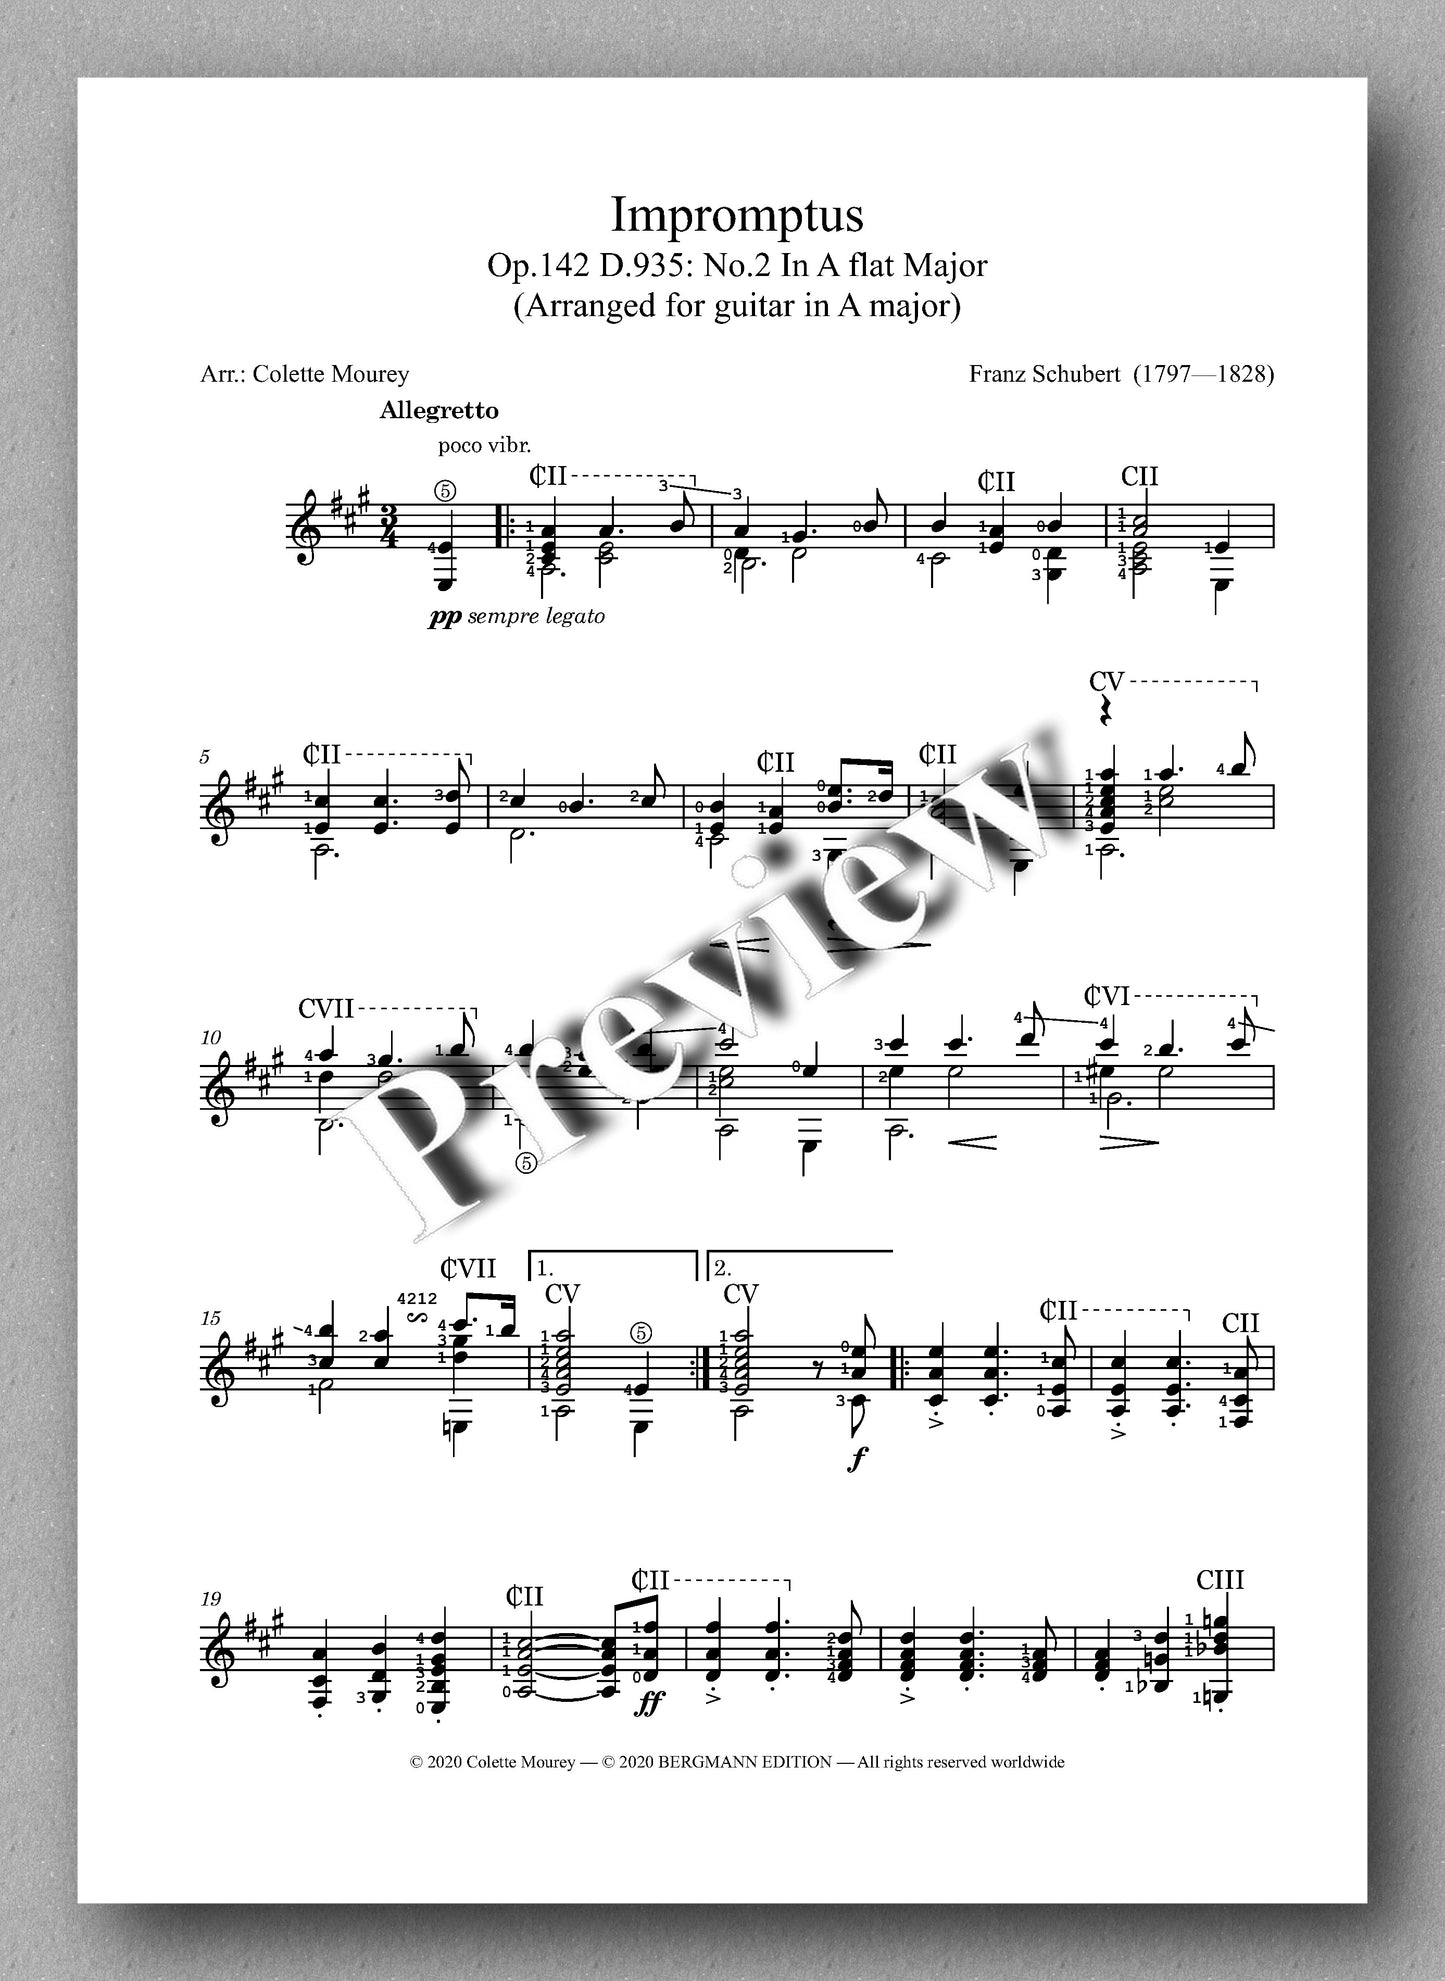 Franz Schubert, Impromptus - preview of the music score 1